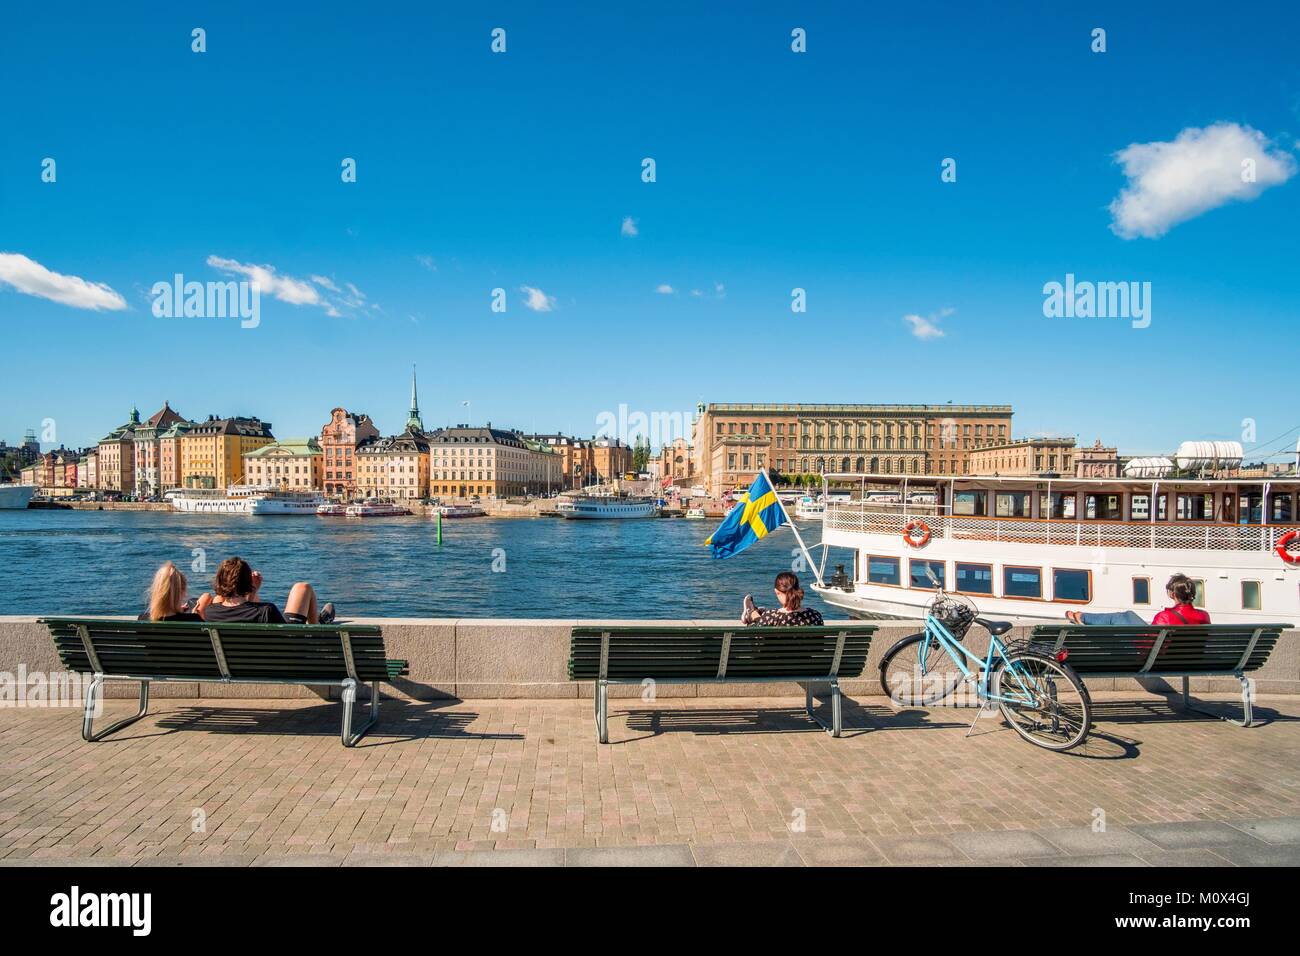 Sweden,Stockholm,Ostermalm district,Quai Sodra Blasieholmskajen,view of the old town Gamla stan Stock Photo